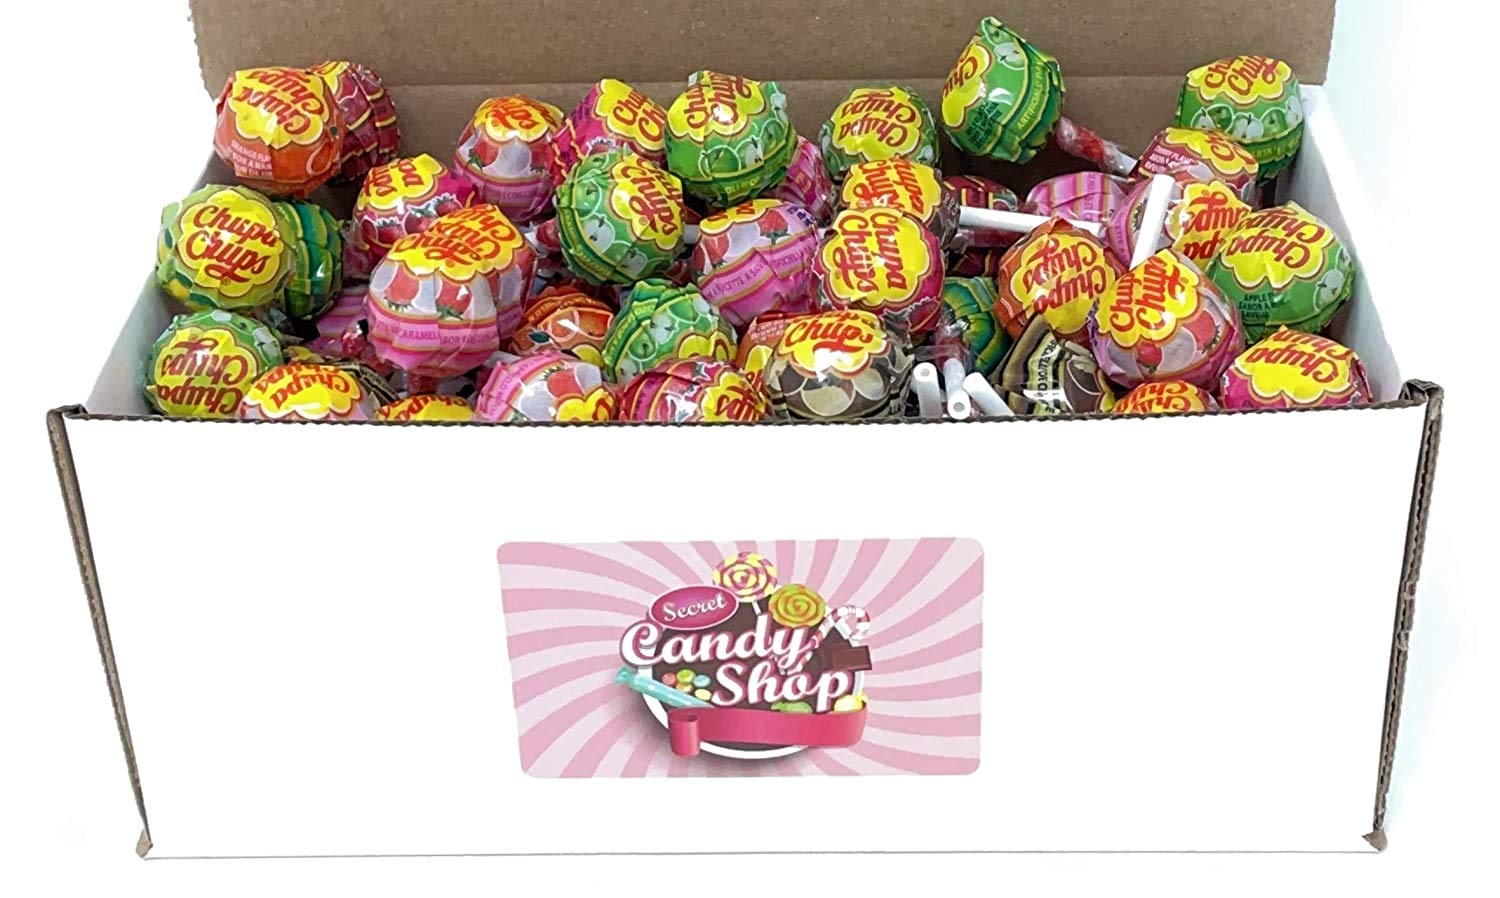 Chupa Chups Lollipops, Assorted Flavors in Box, 3LB Bulk Candy